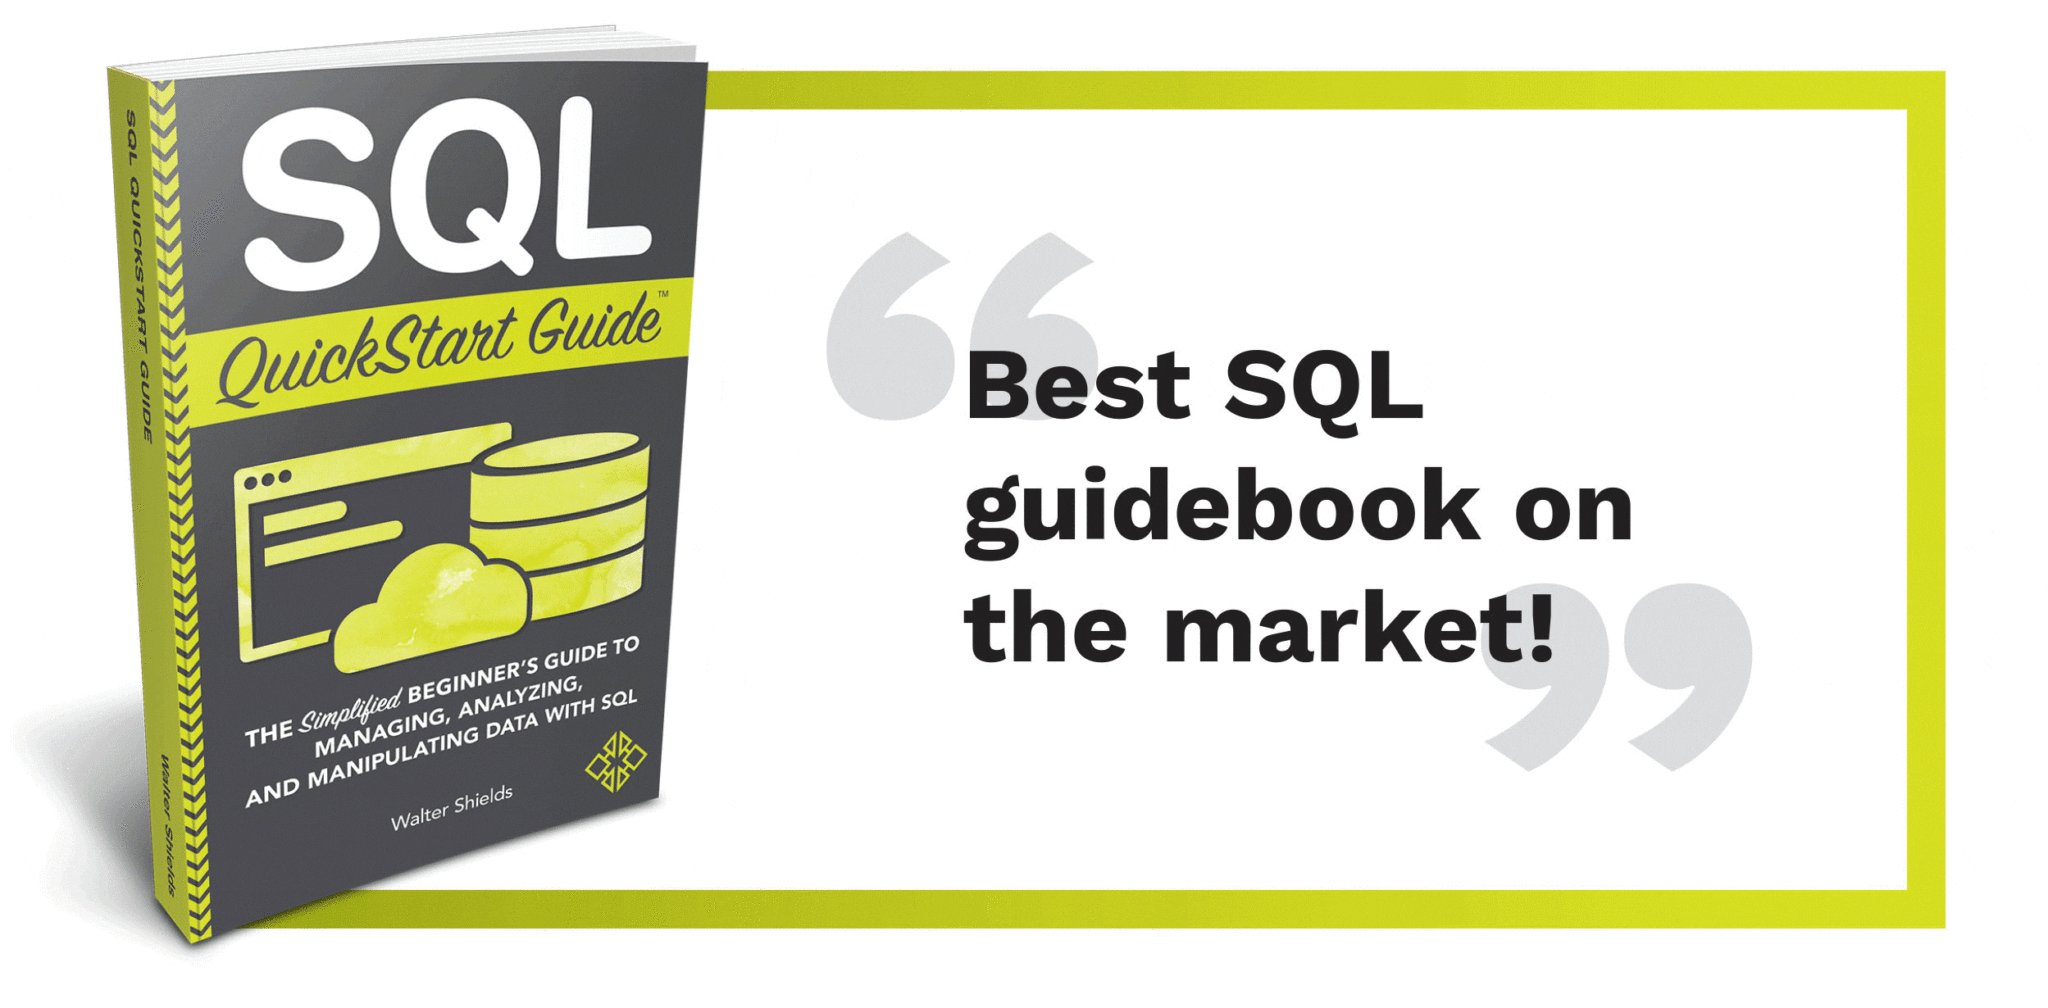 SQL QuickStart Guide by Walter Shields